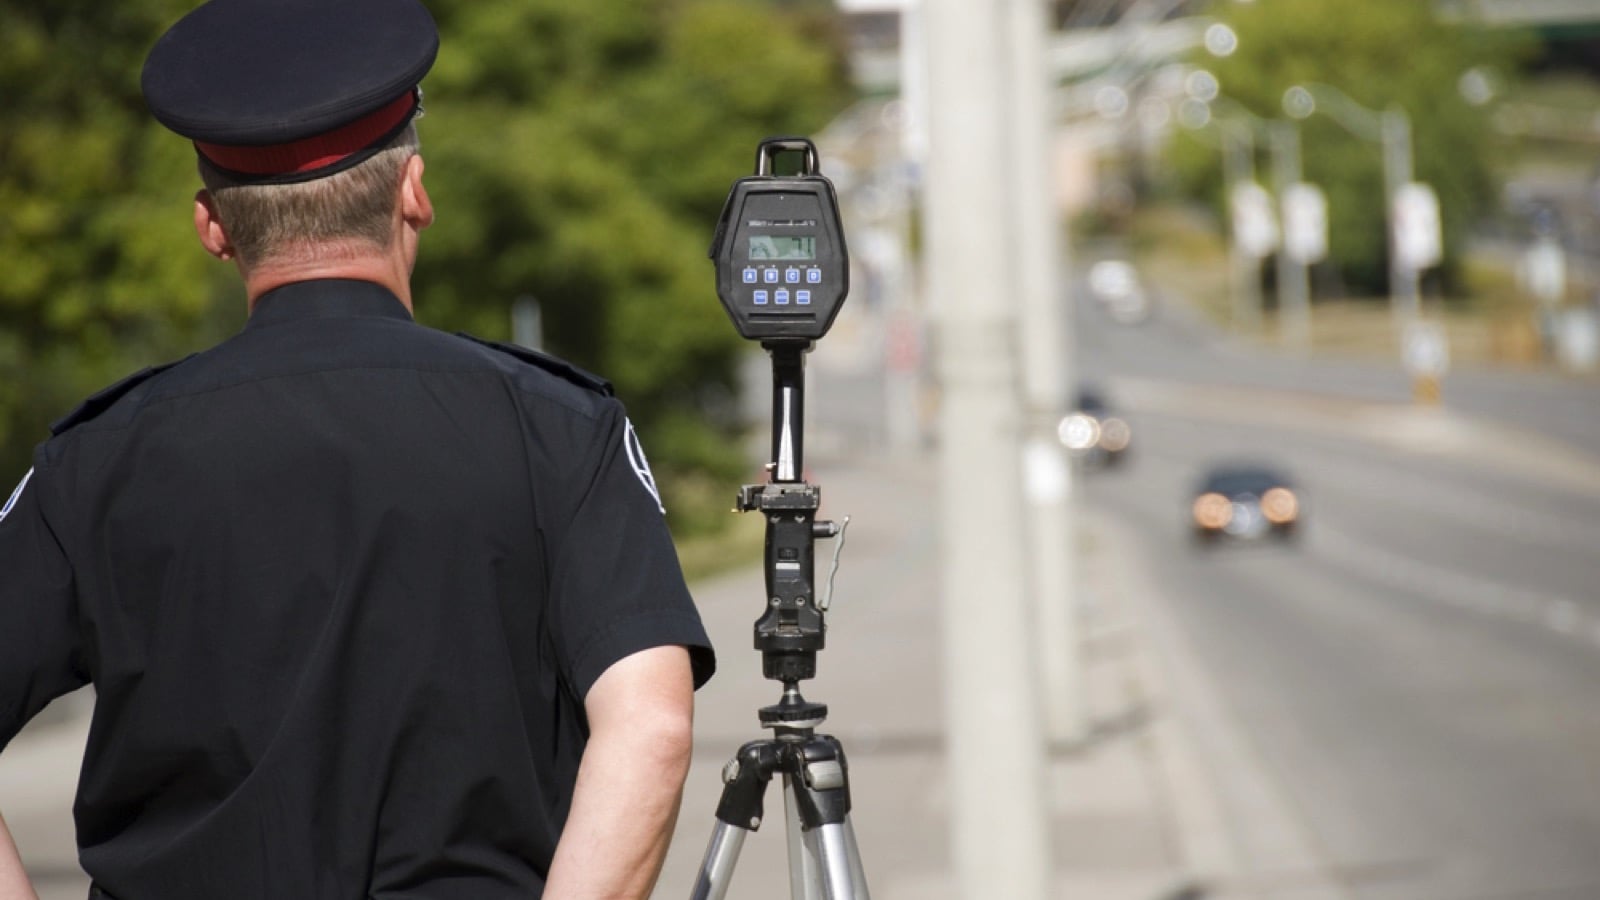 North American policeman waits to catch speeding drivers with a radar gun